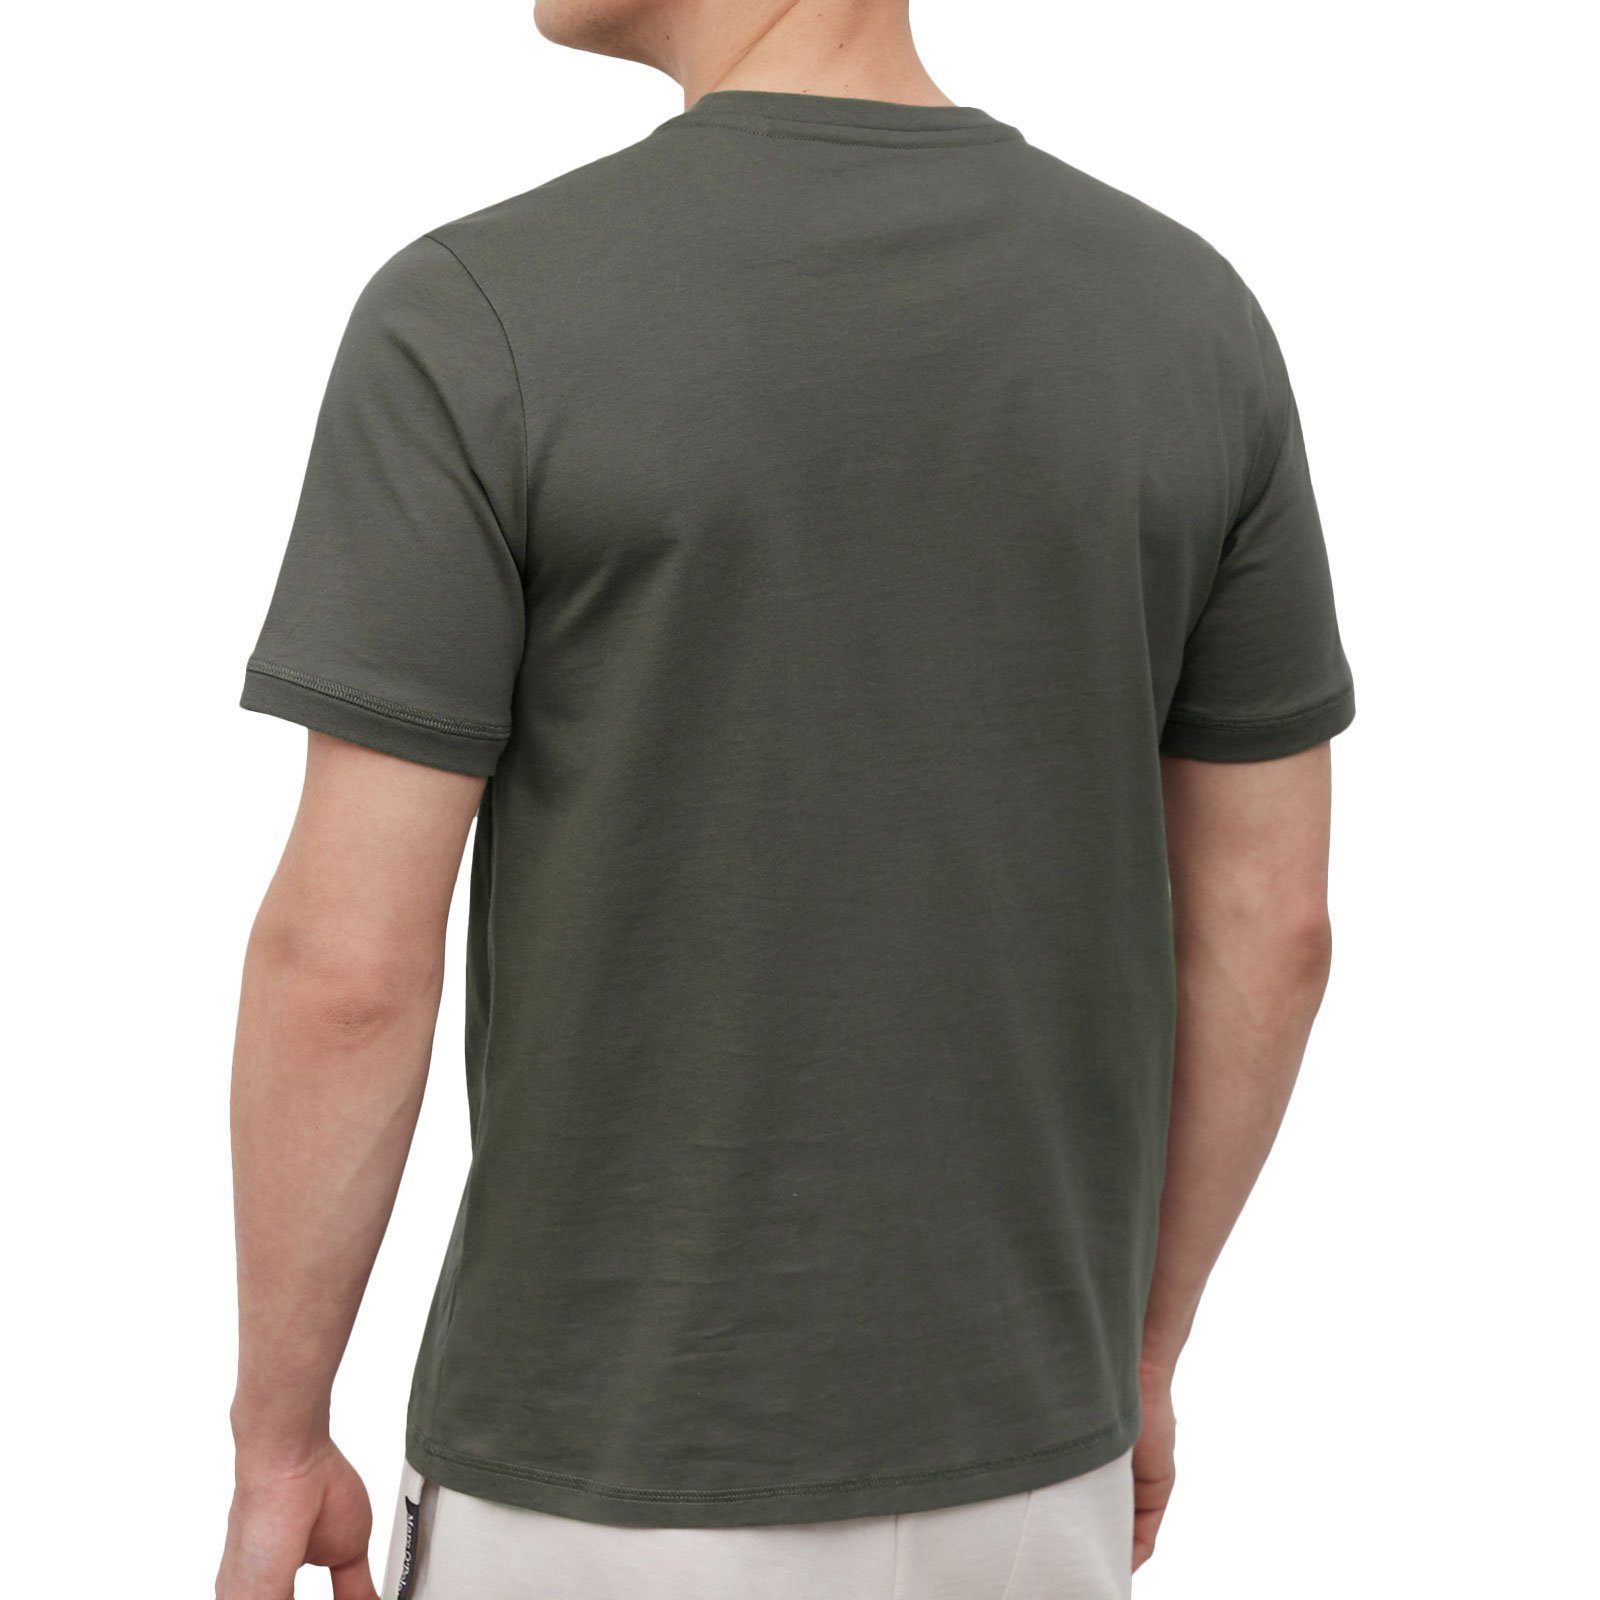 Marc O'Polo T-Shirt Shirt Crew-Neck Aufdruck O'Polo 207 mit Marc großem graphit